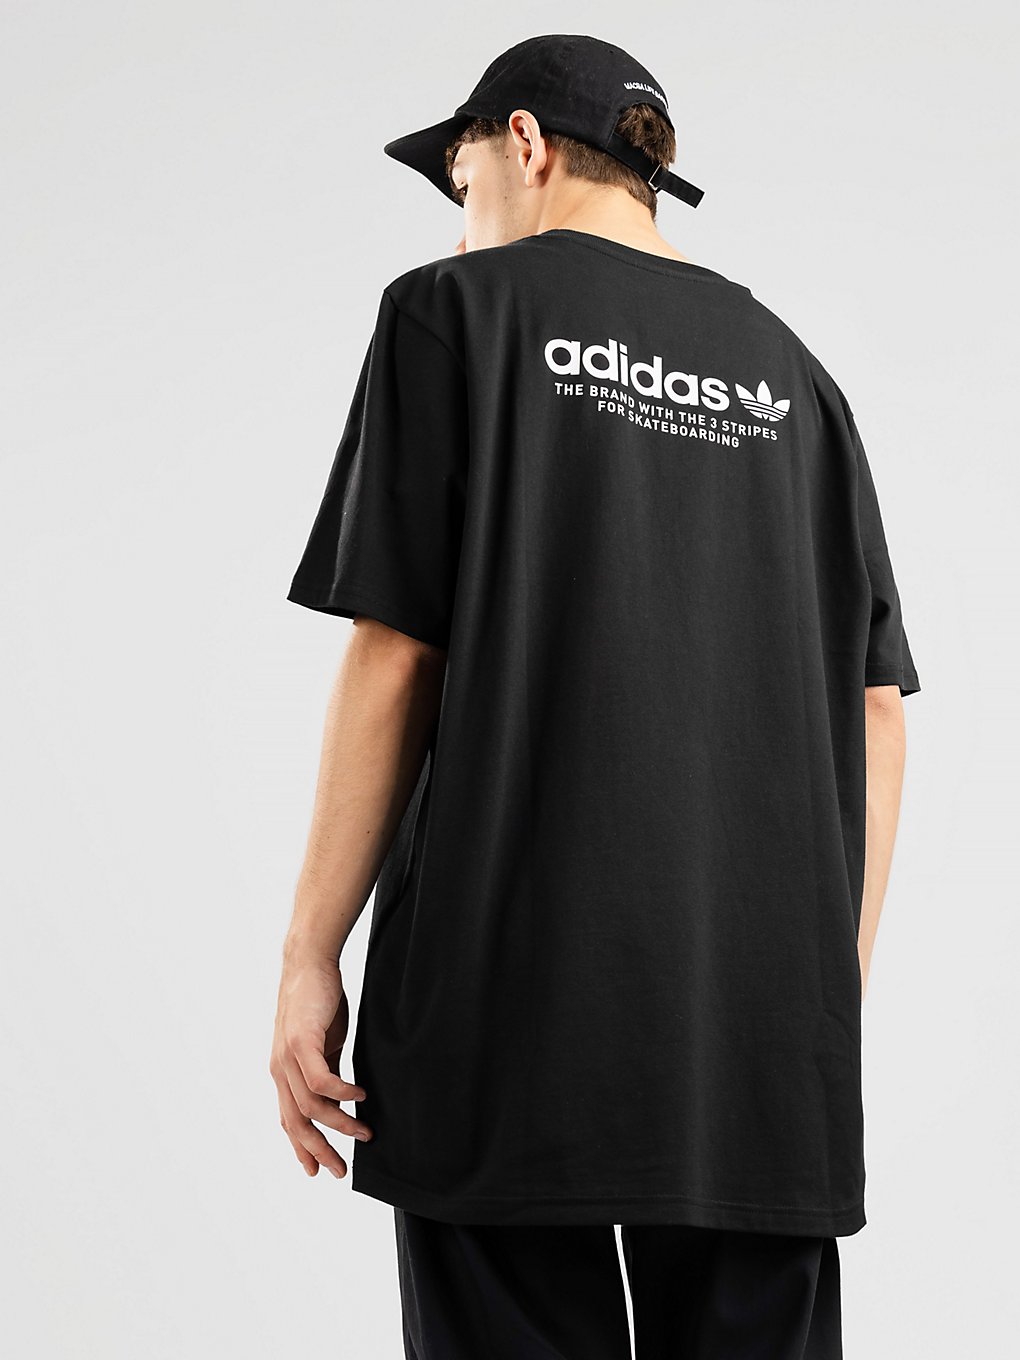 adidas Skateboarding 4.0 Logo T-Shirt white kaufen